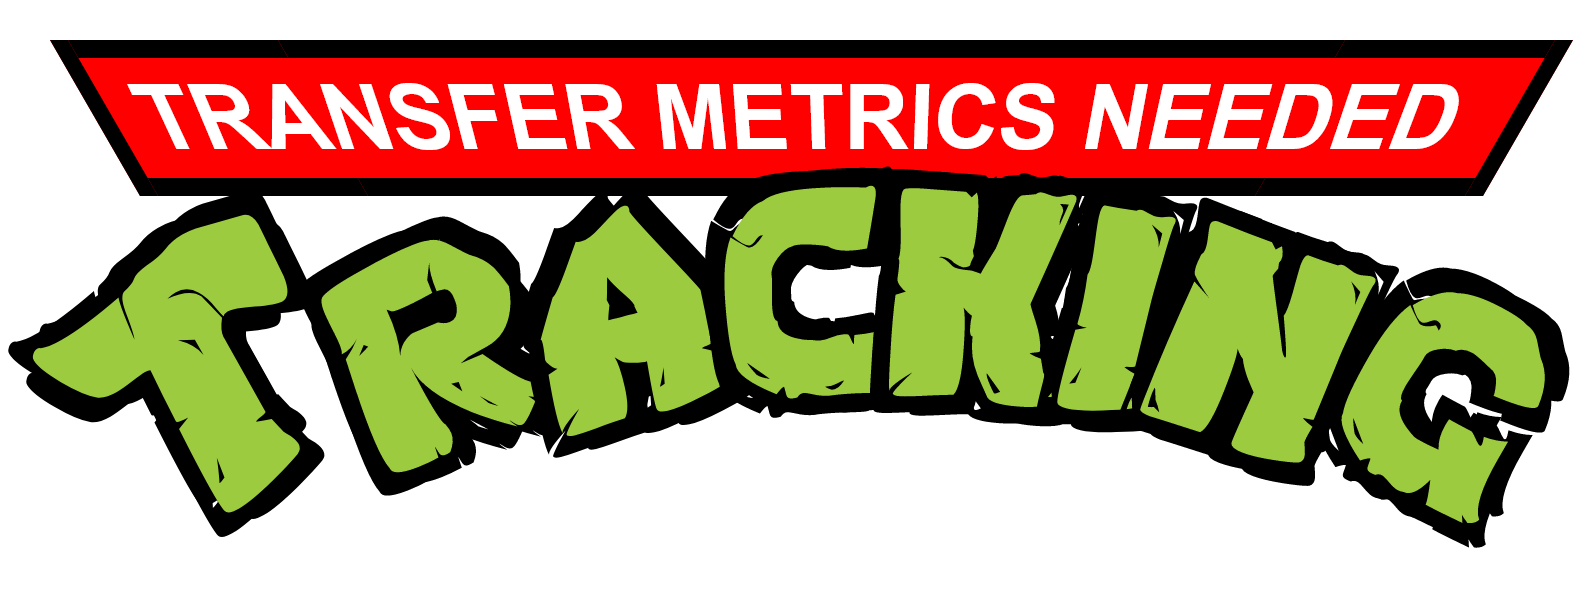 Transfer Metrics Needed Tracking in the style of the Teenage Mutant Ninja Turtles logo